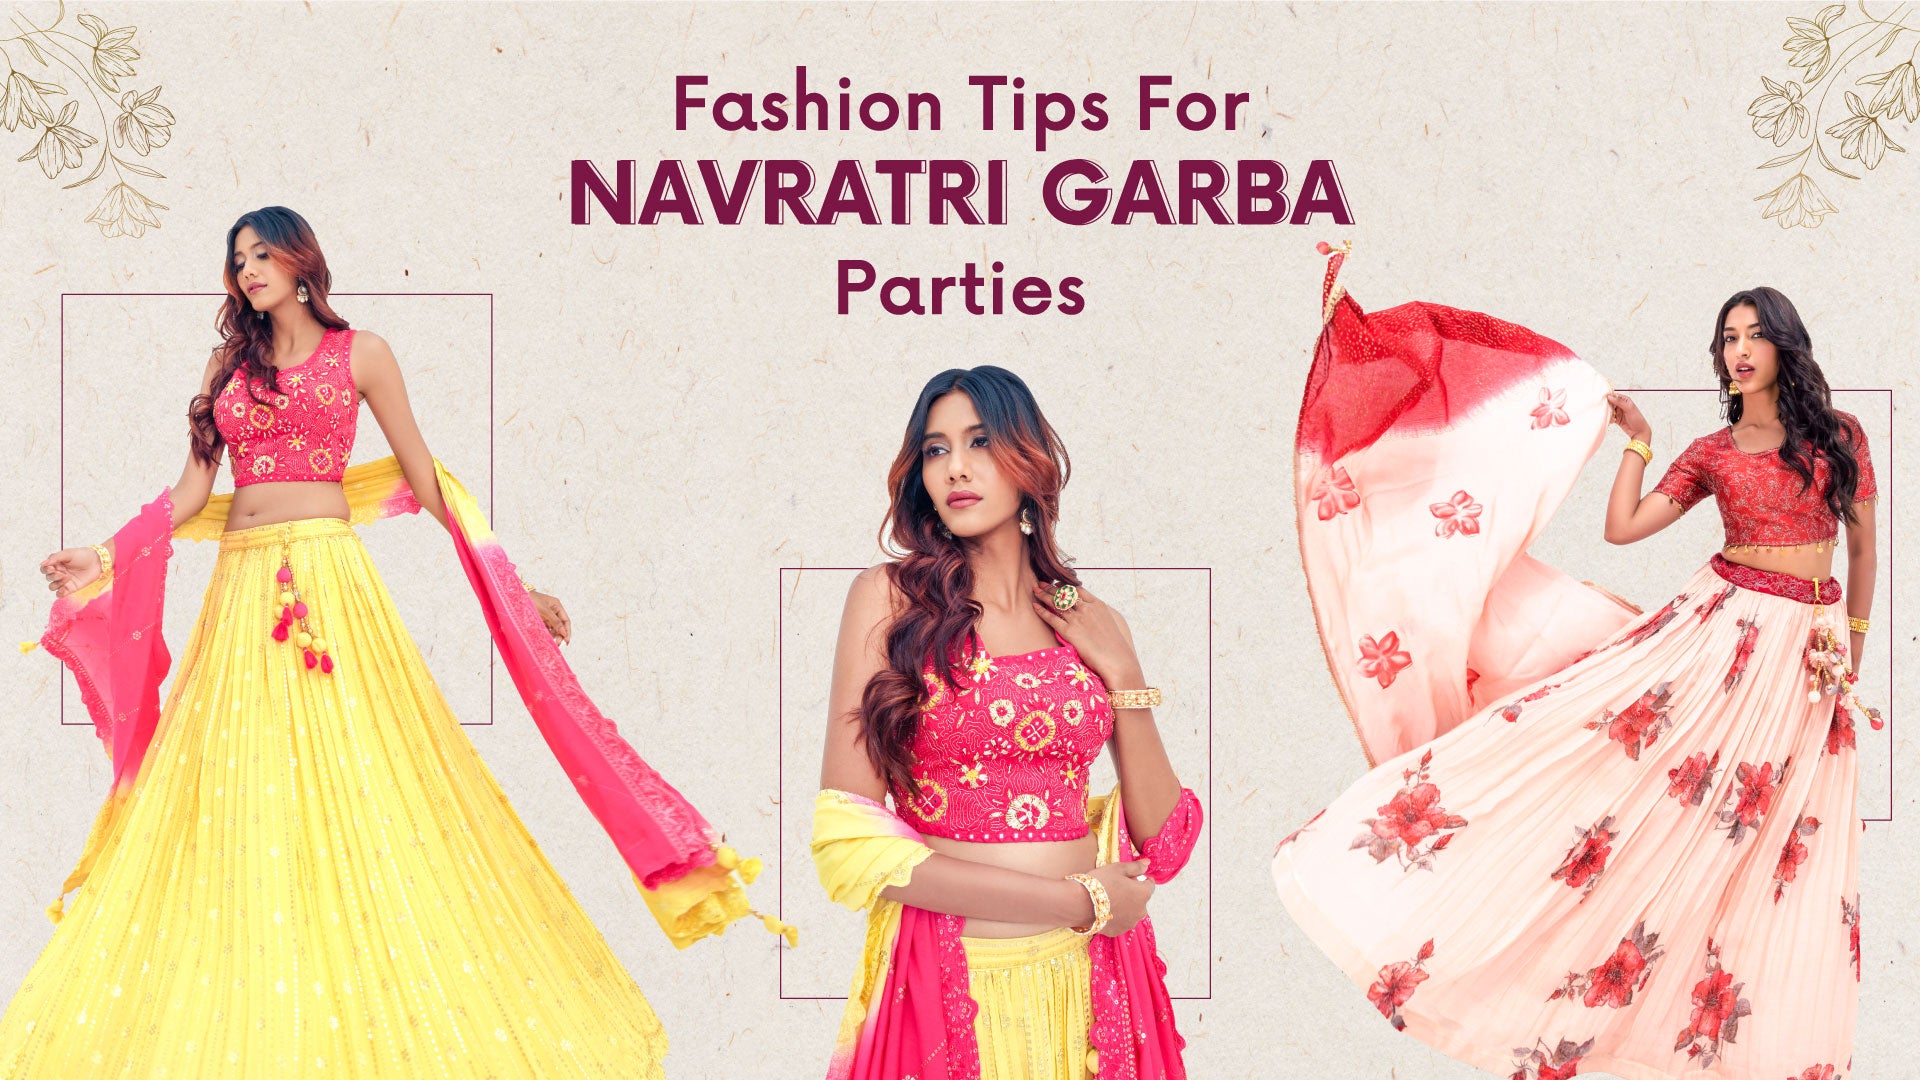 Fashion Tips For Navratri Garba Parties